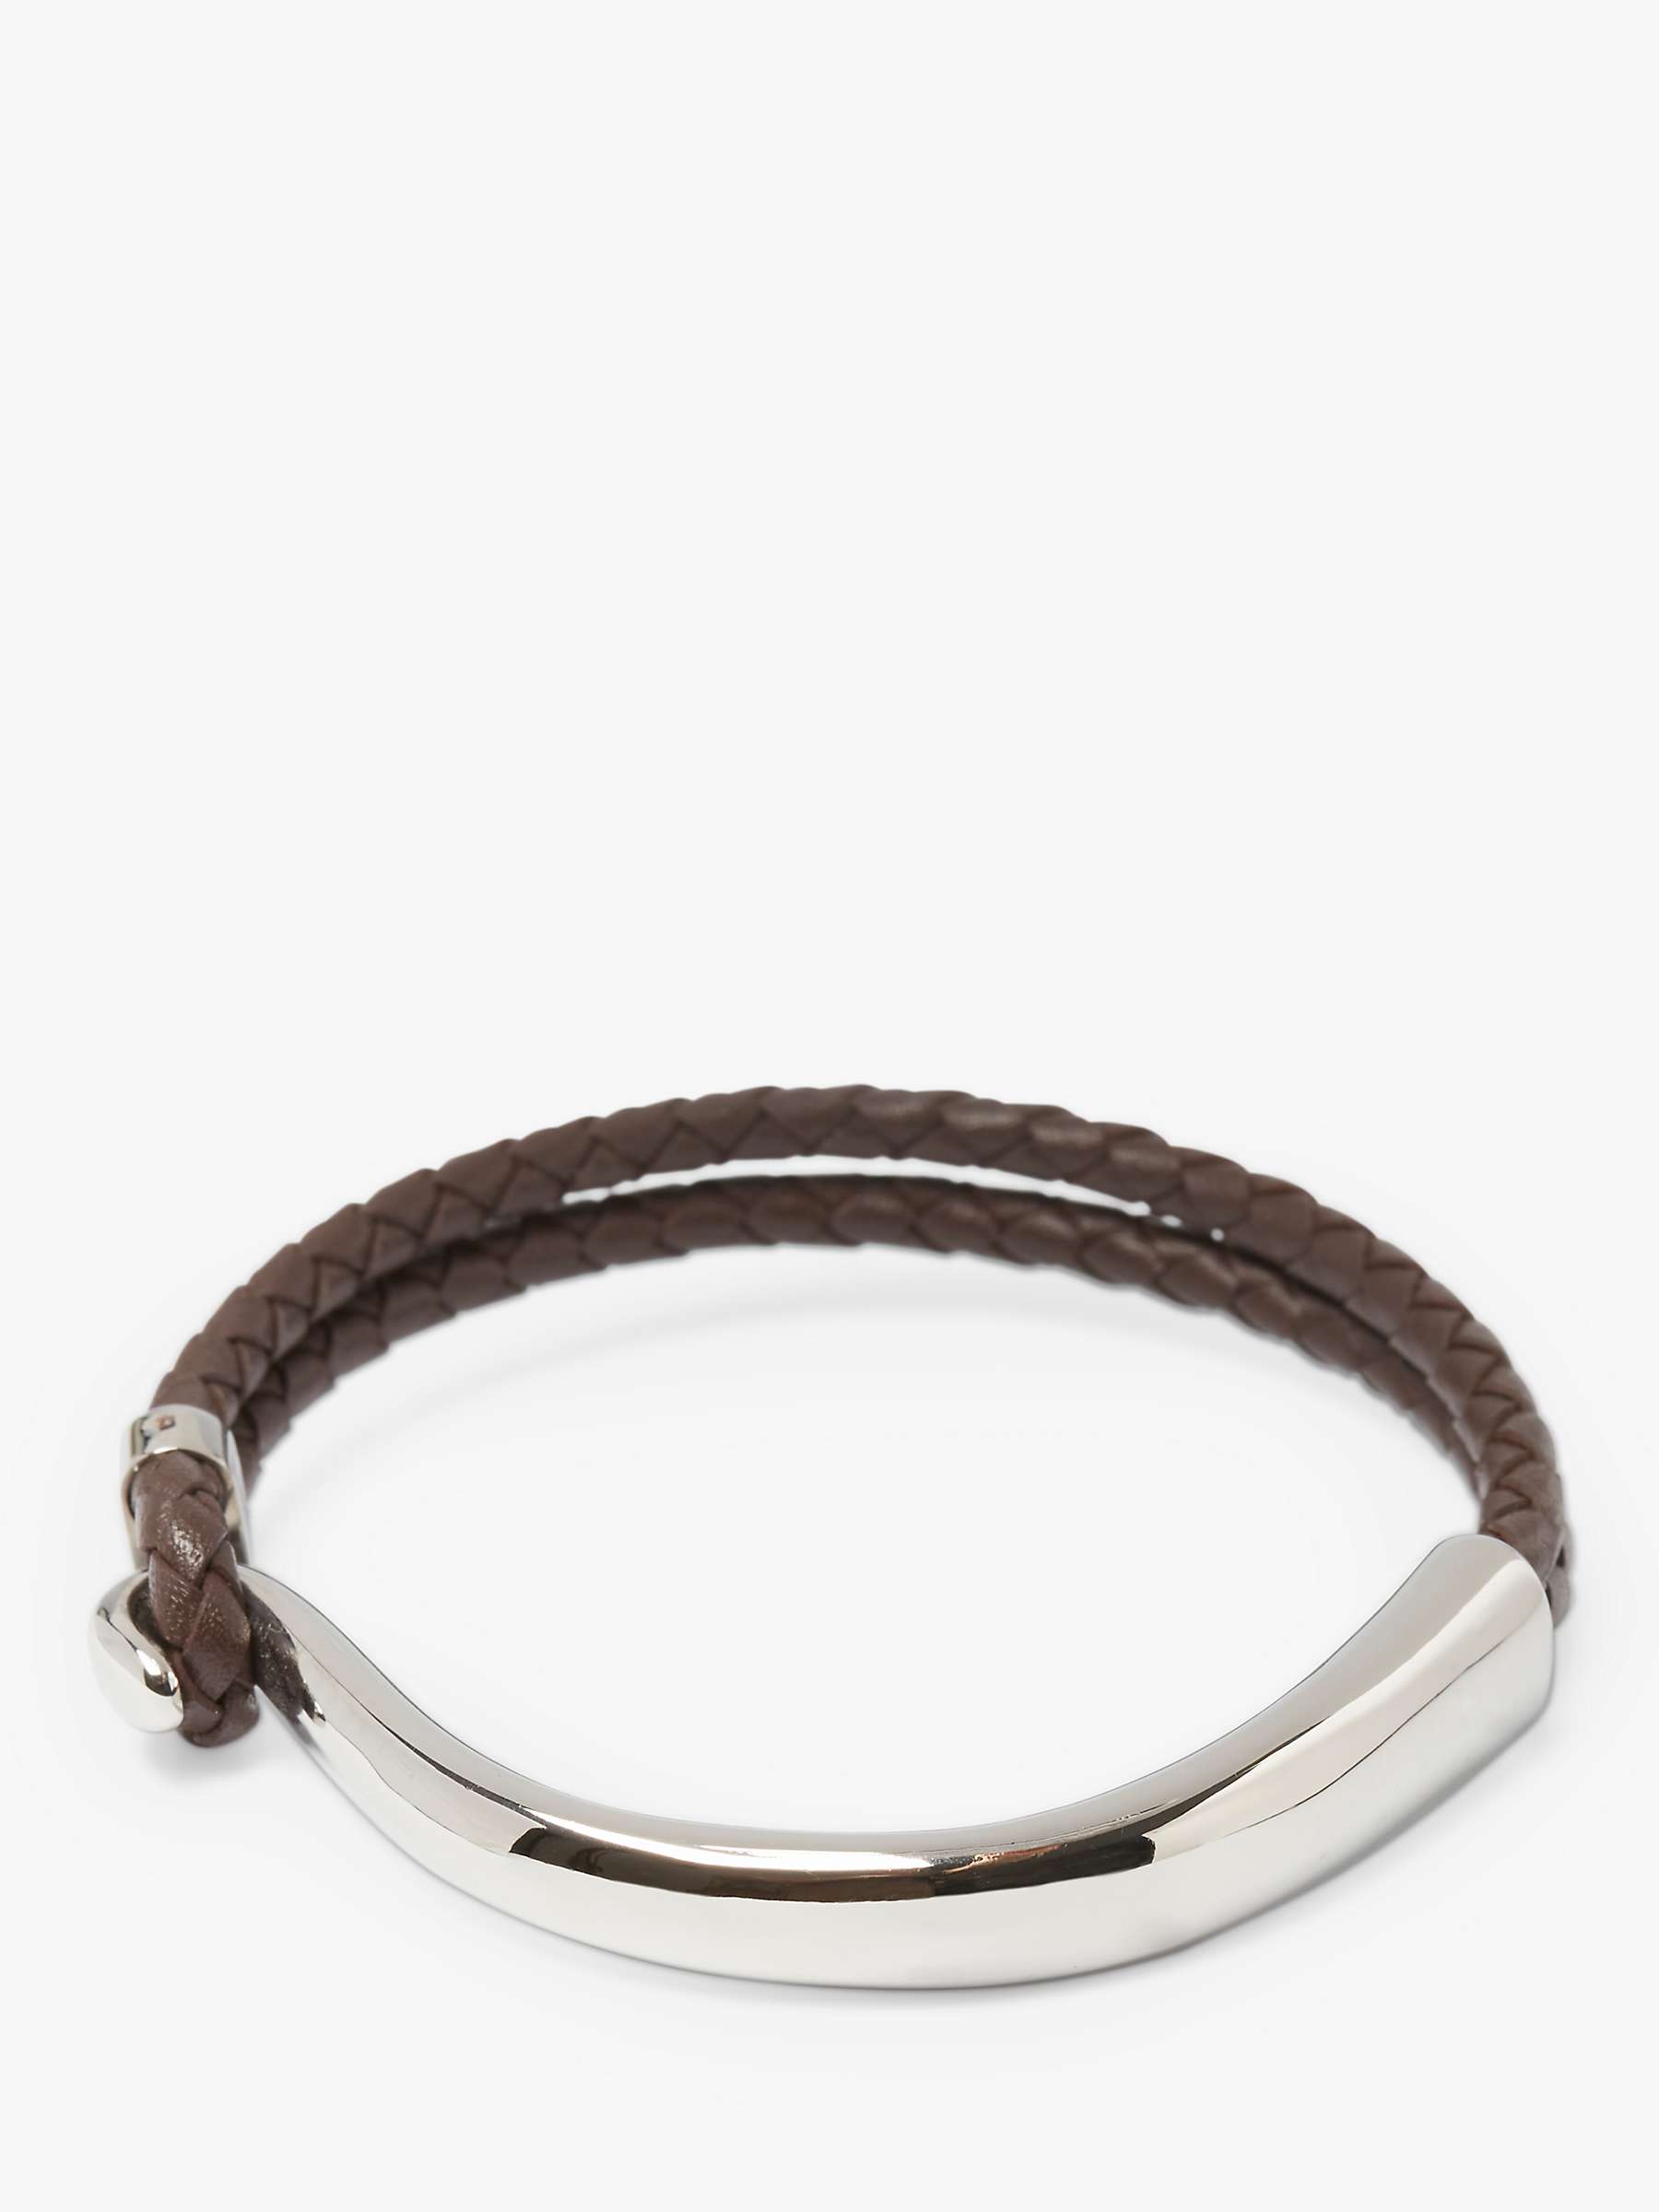 Buy Simon Carter Lizard Leather Stainless Steel Bracelet, Brown Online at johnlewis.com